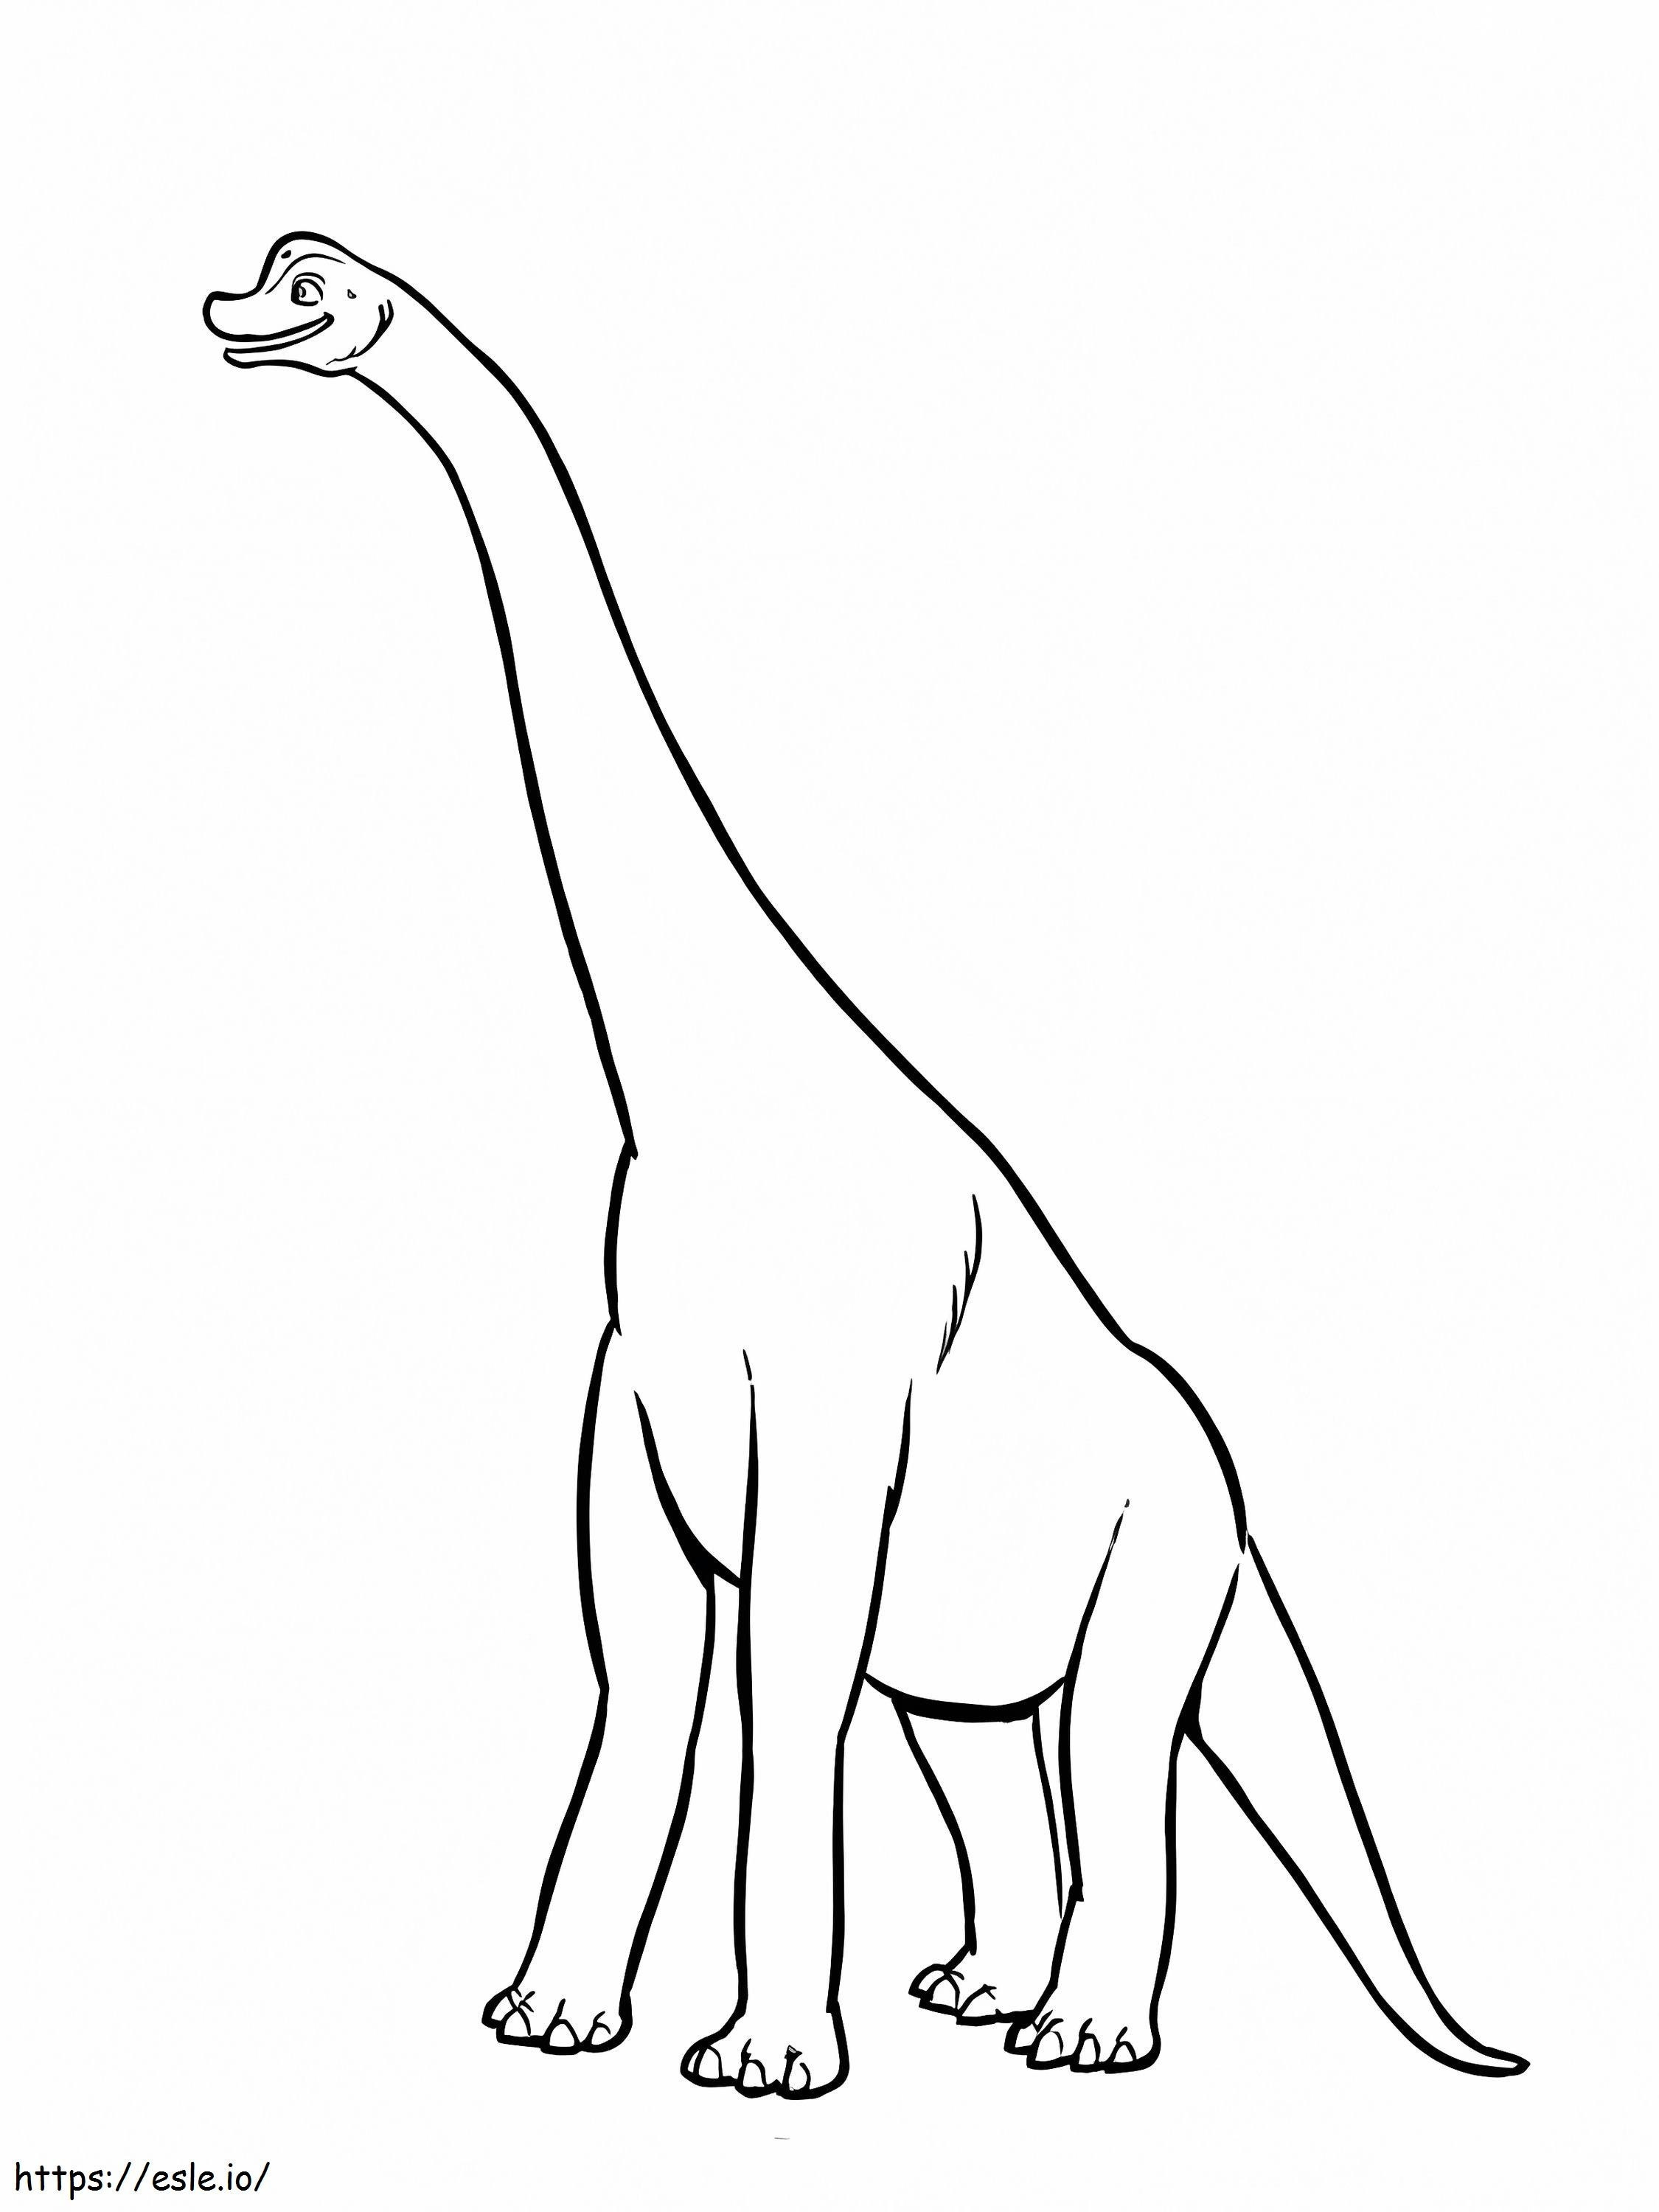 Brachiosaurus 13 coloring page